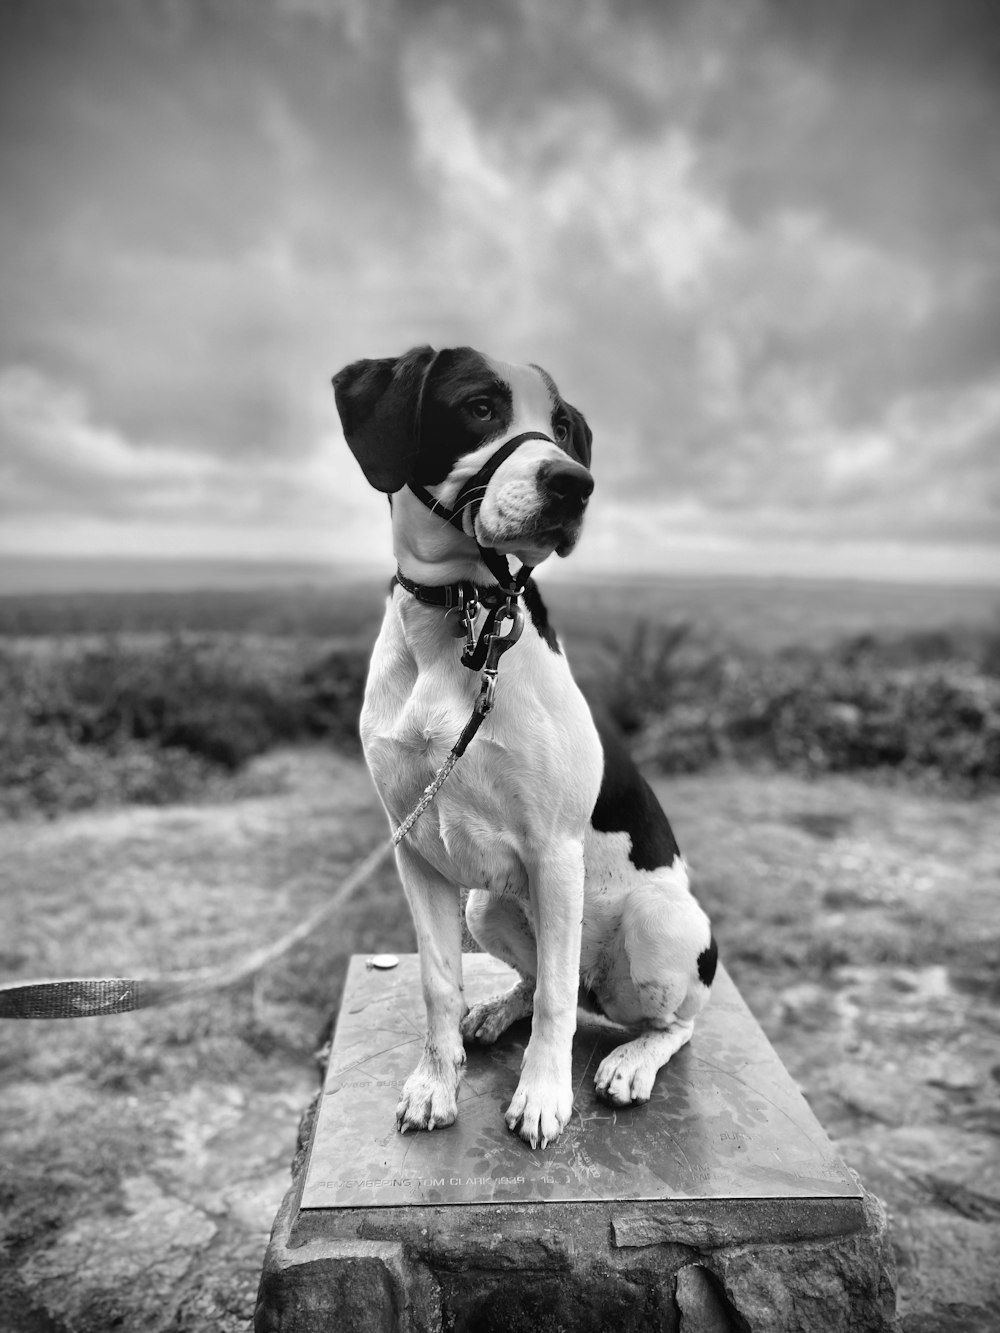 a dog on a leash sitting on a stone bench